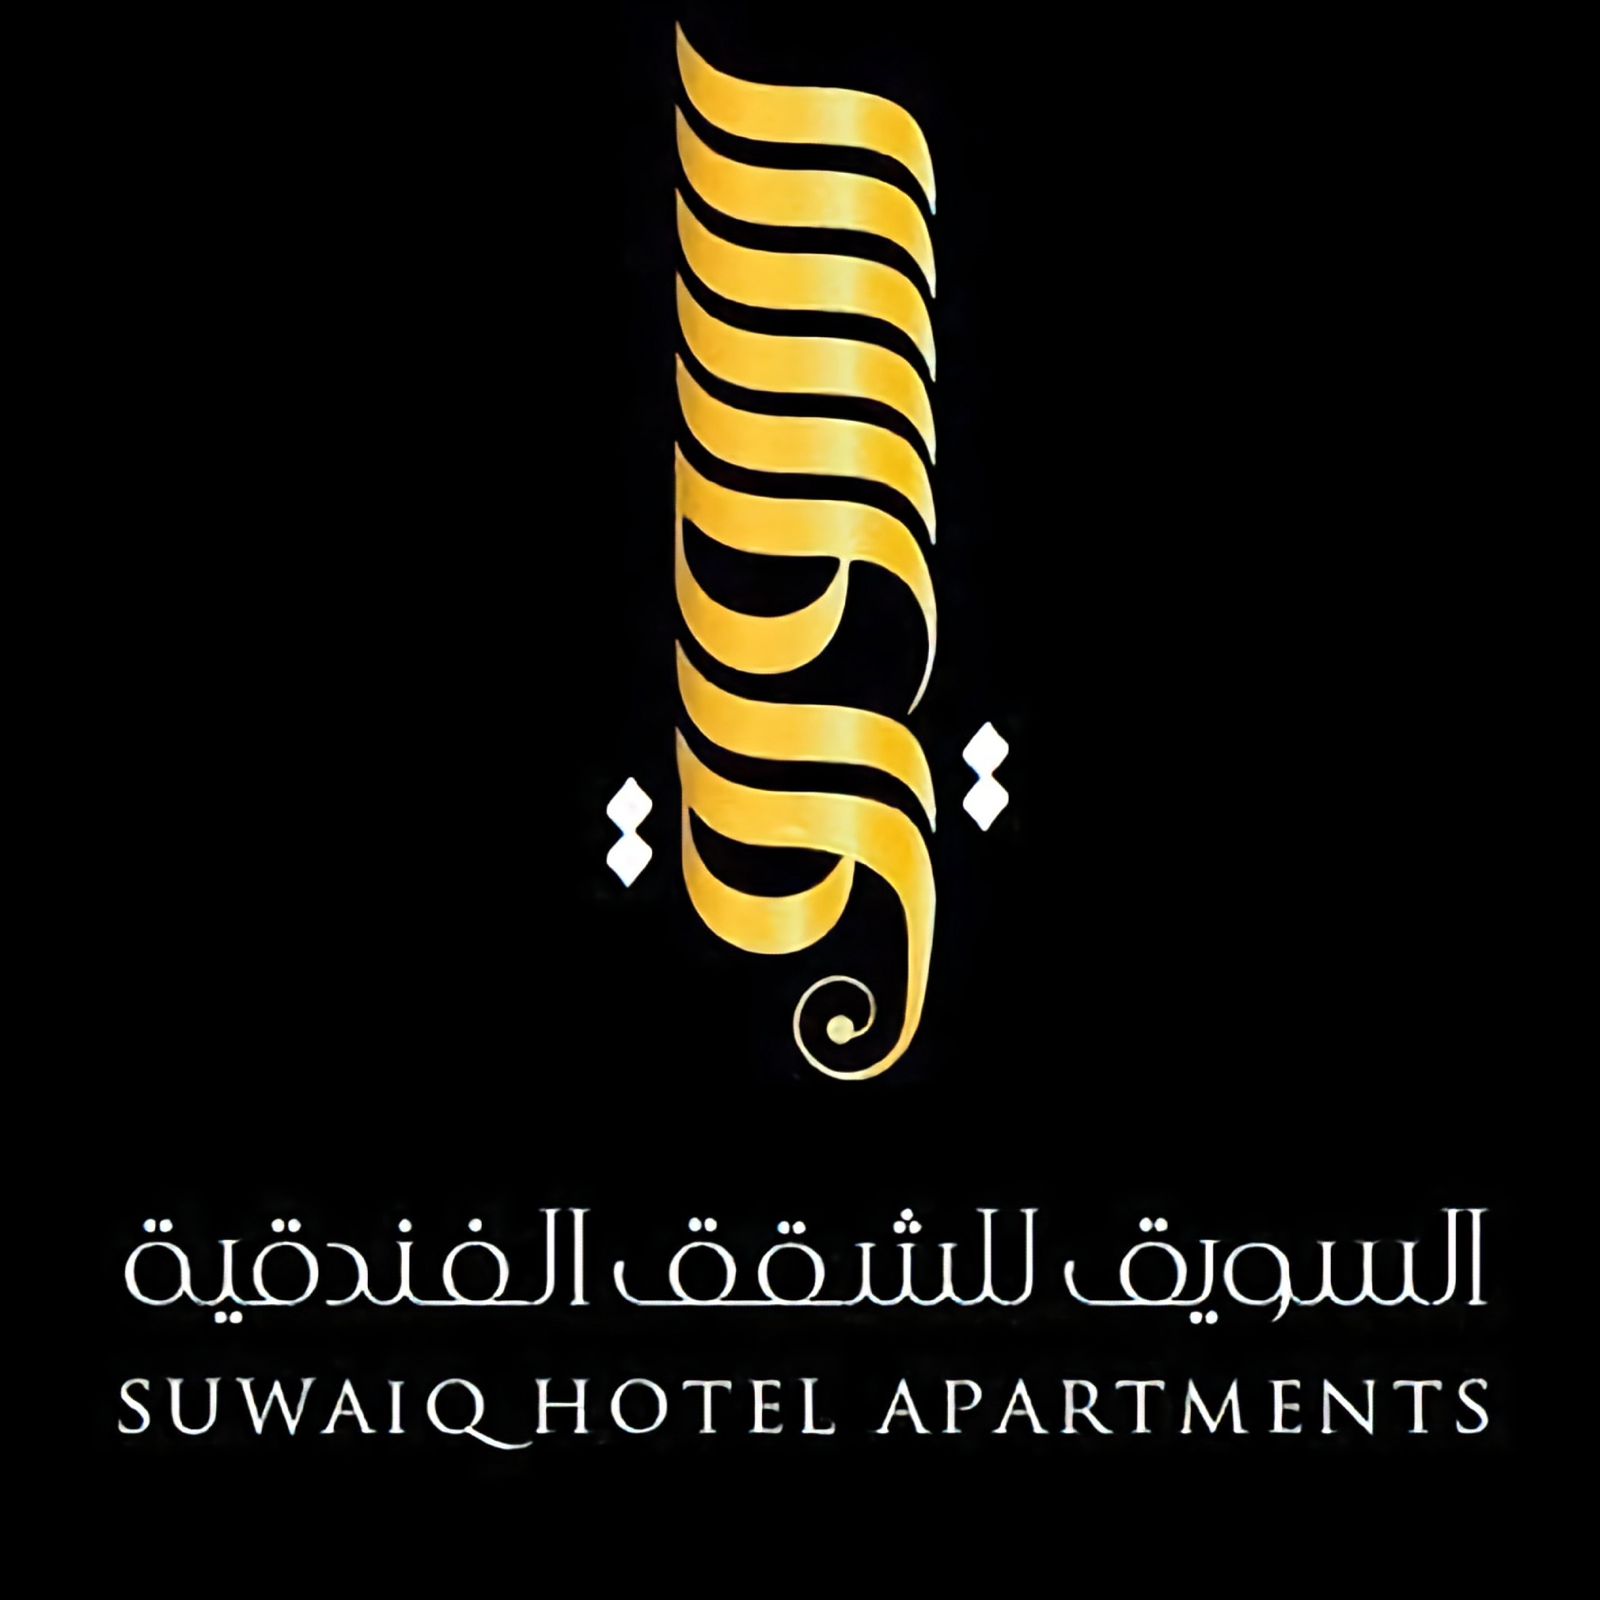 Suwaiq Hotel Apartments